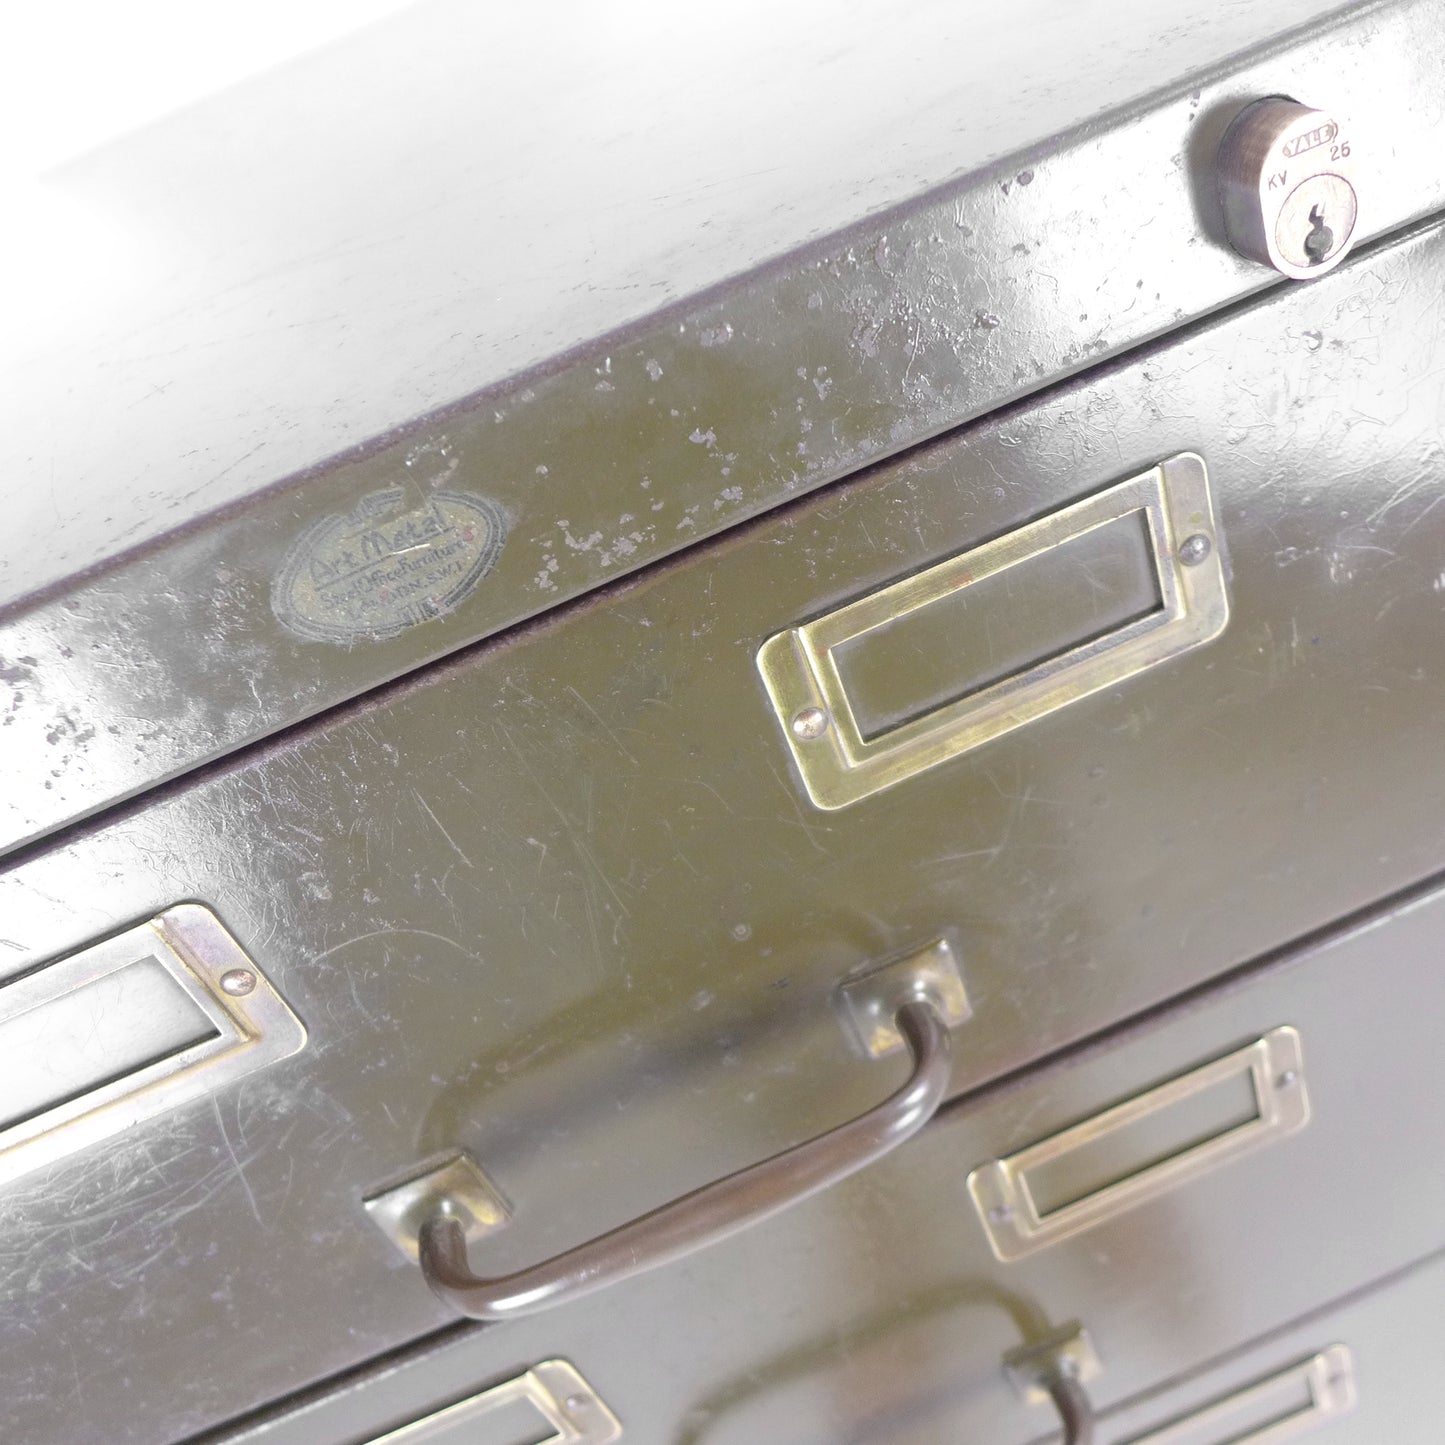 Vintage Metal Filing Cabinet by Artmetal - Brass Fittings - Industrial 9 Narrow Drawers in Green